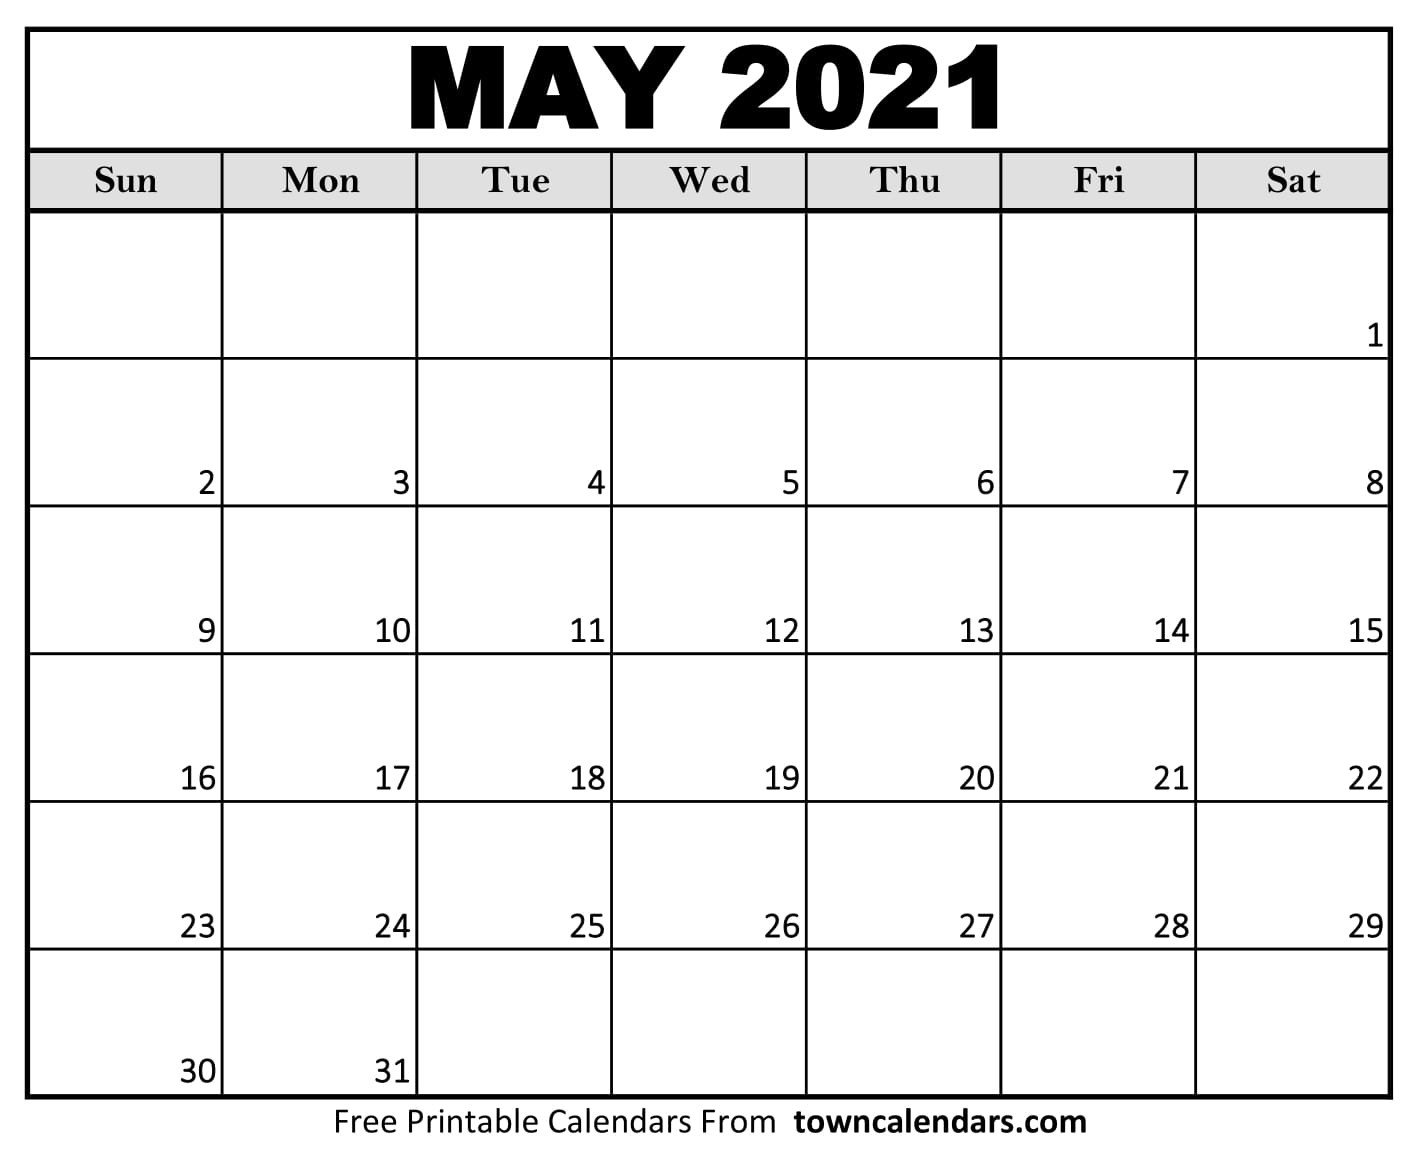 Printable May 2021 Calendar - Towncalendars-May 2021 Calendar Printable Bill